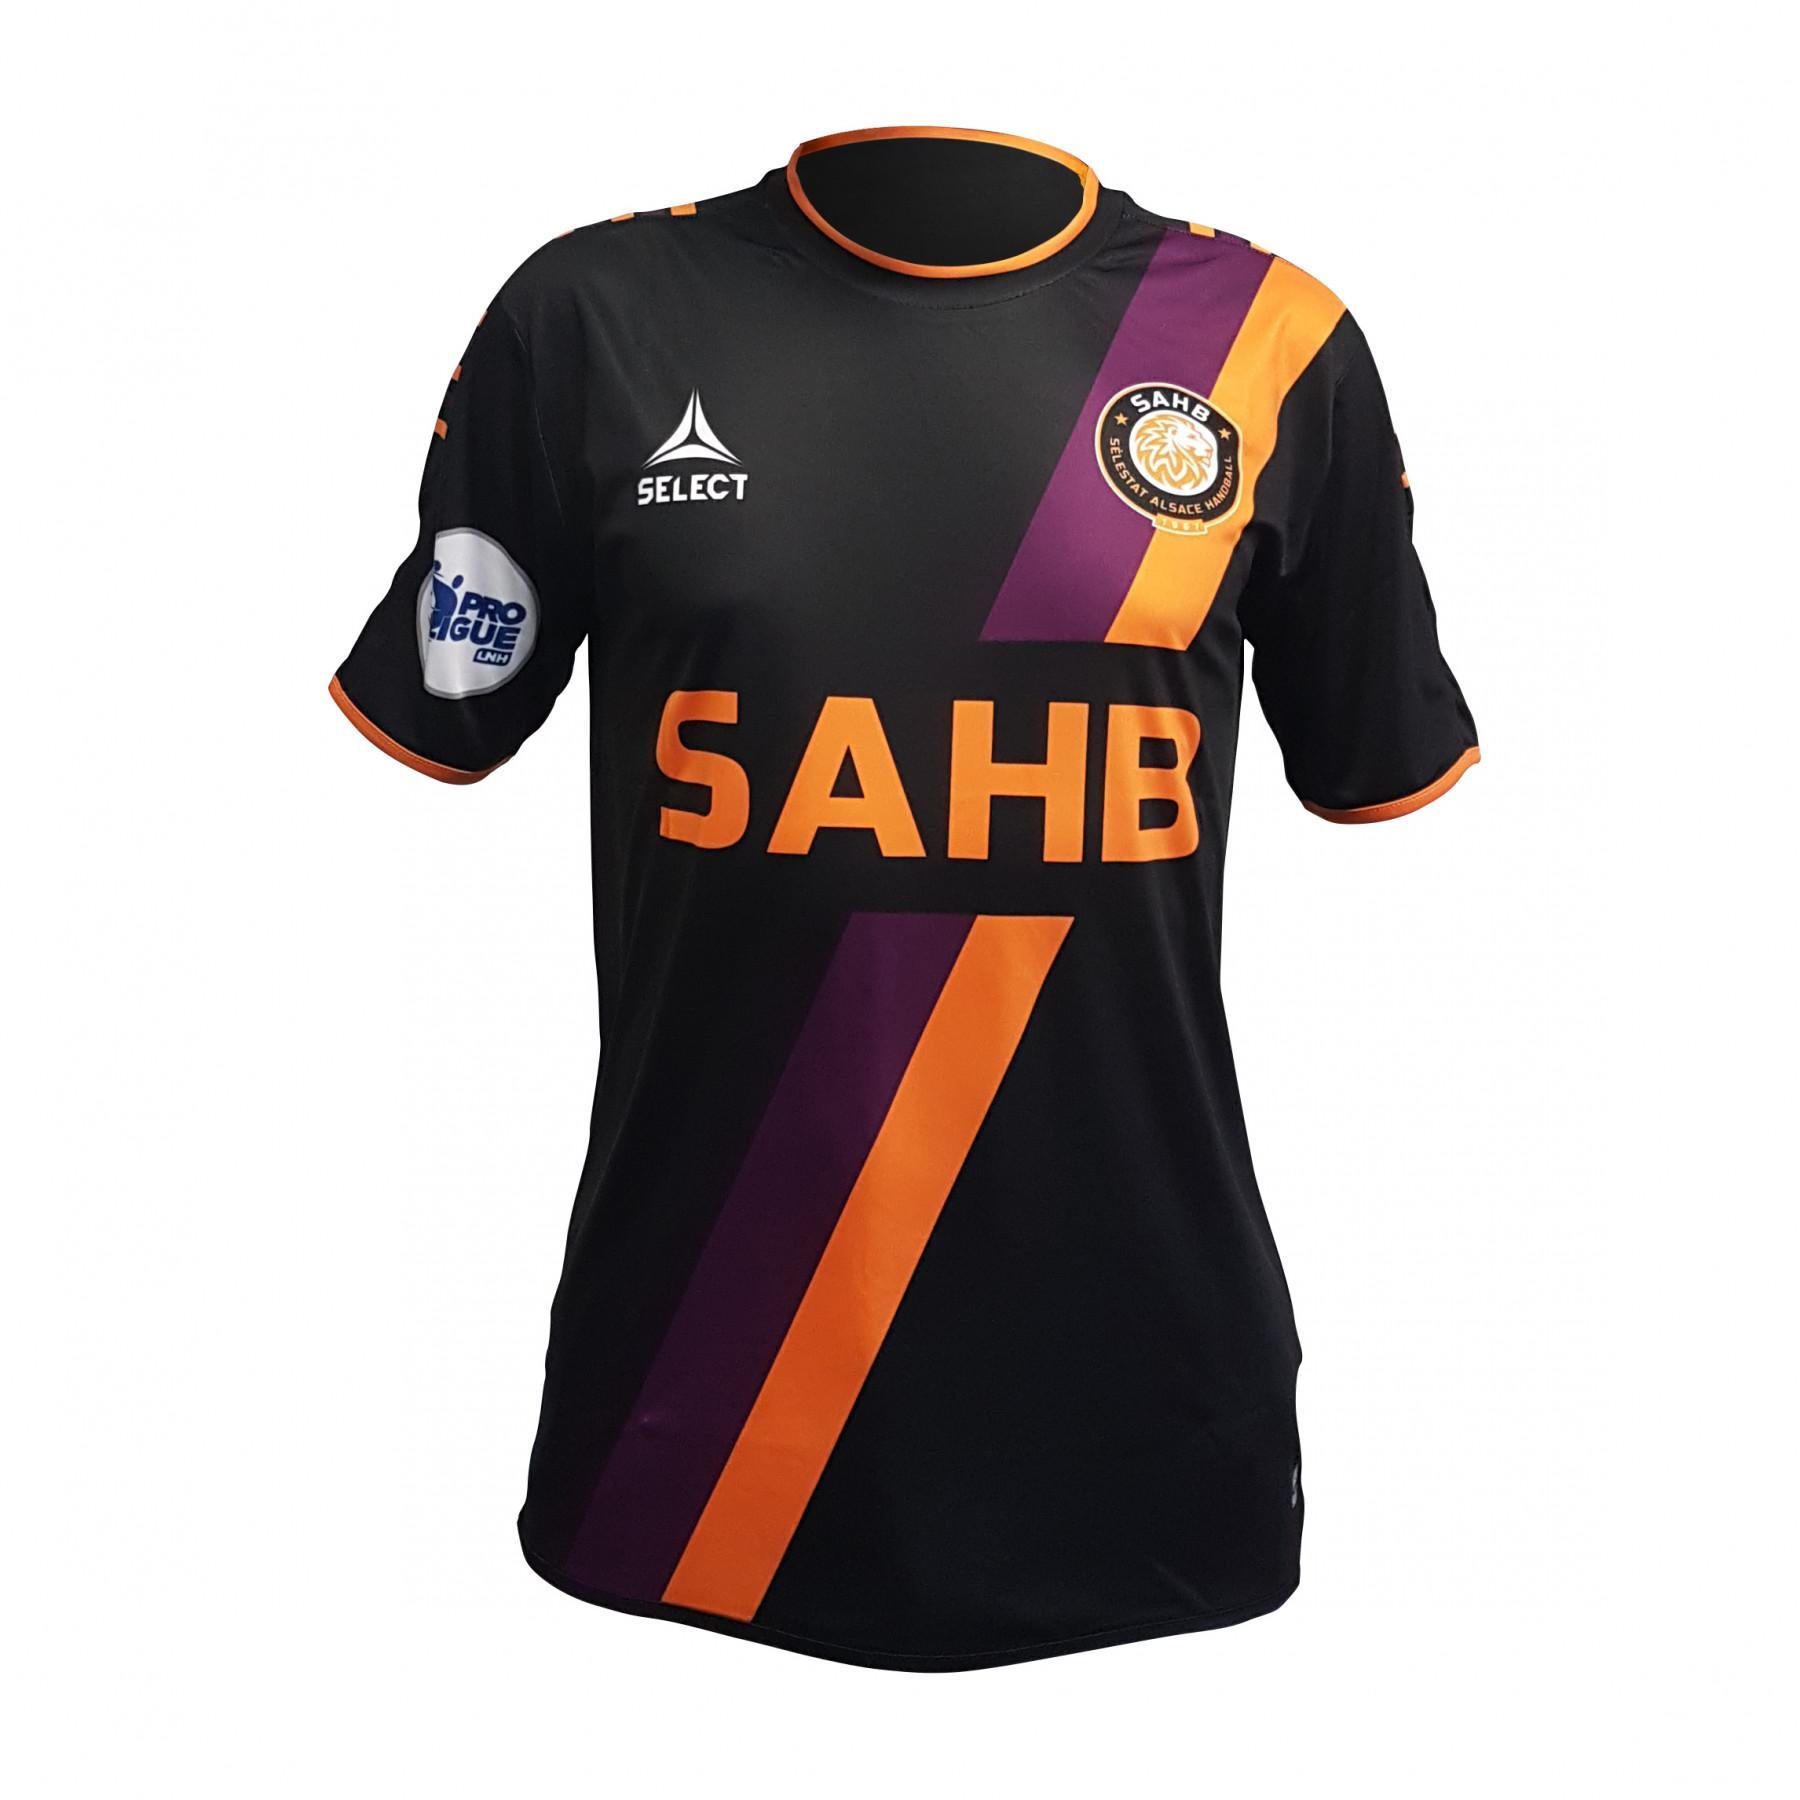 Koszulka rozgrzewająca Select SAHB 2019/20